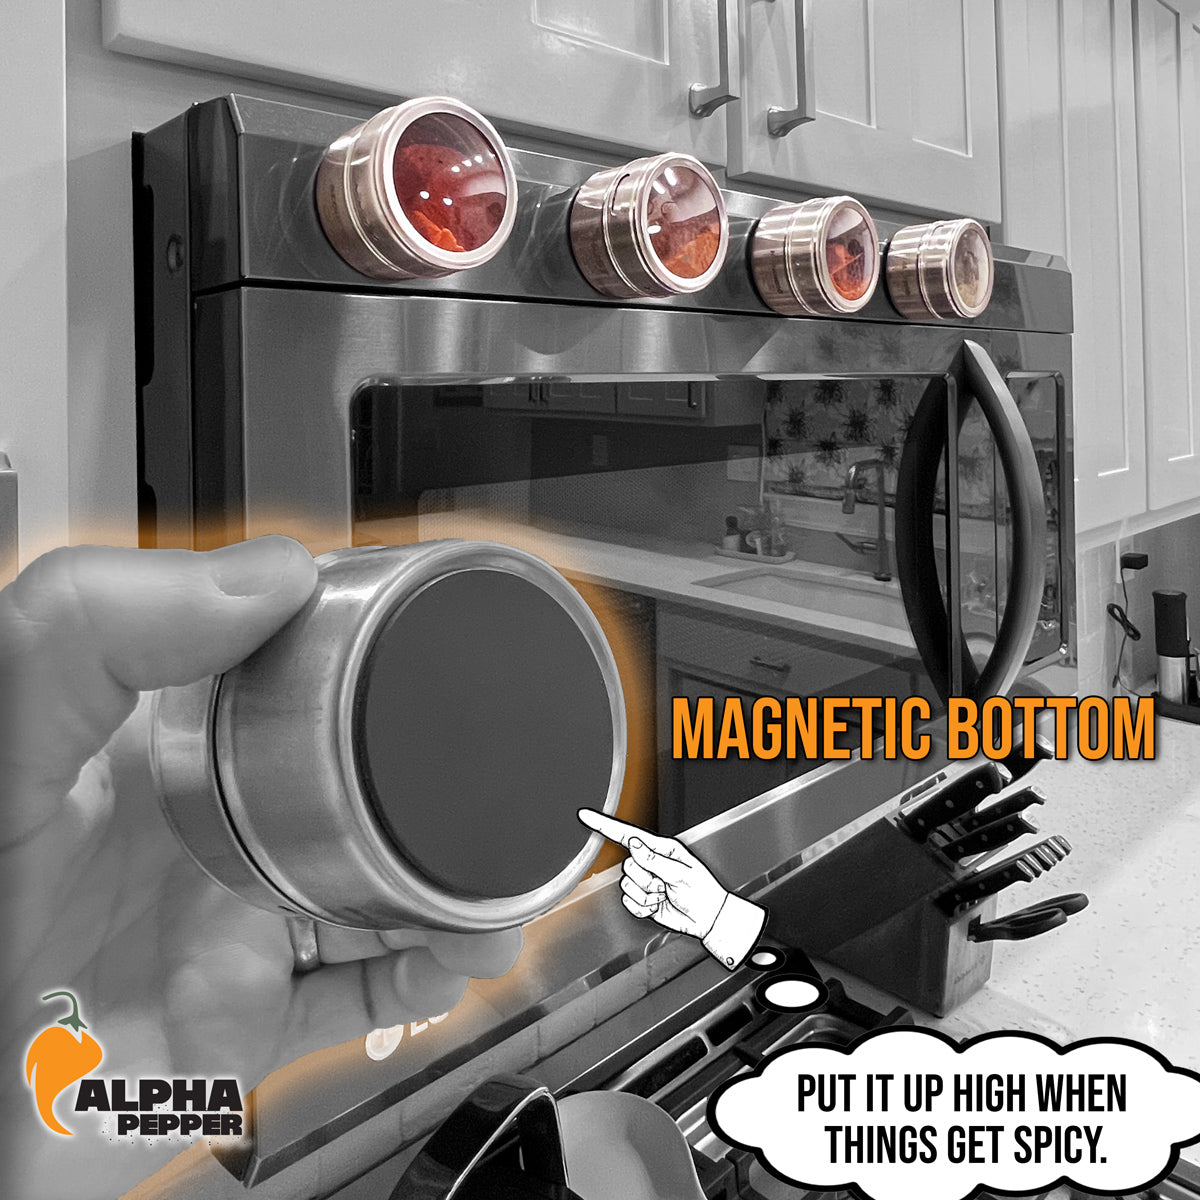 Alpha Pepper Tins showing magnetic bottom